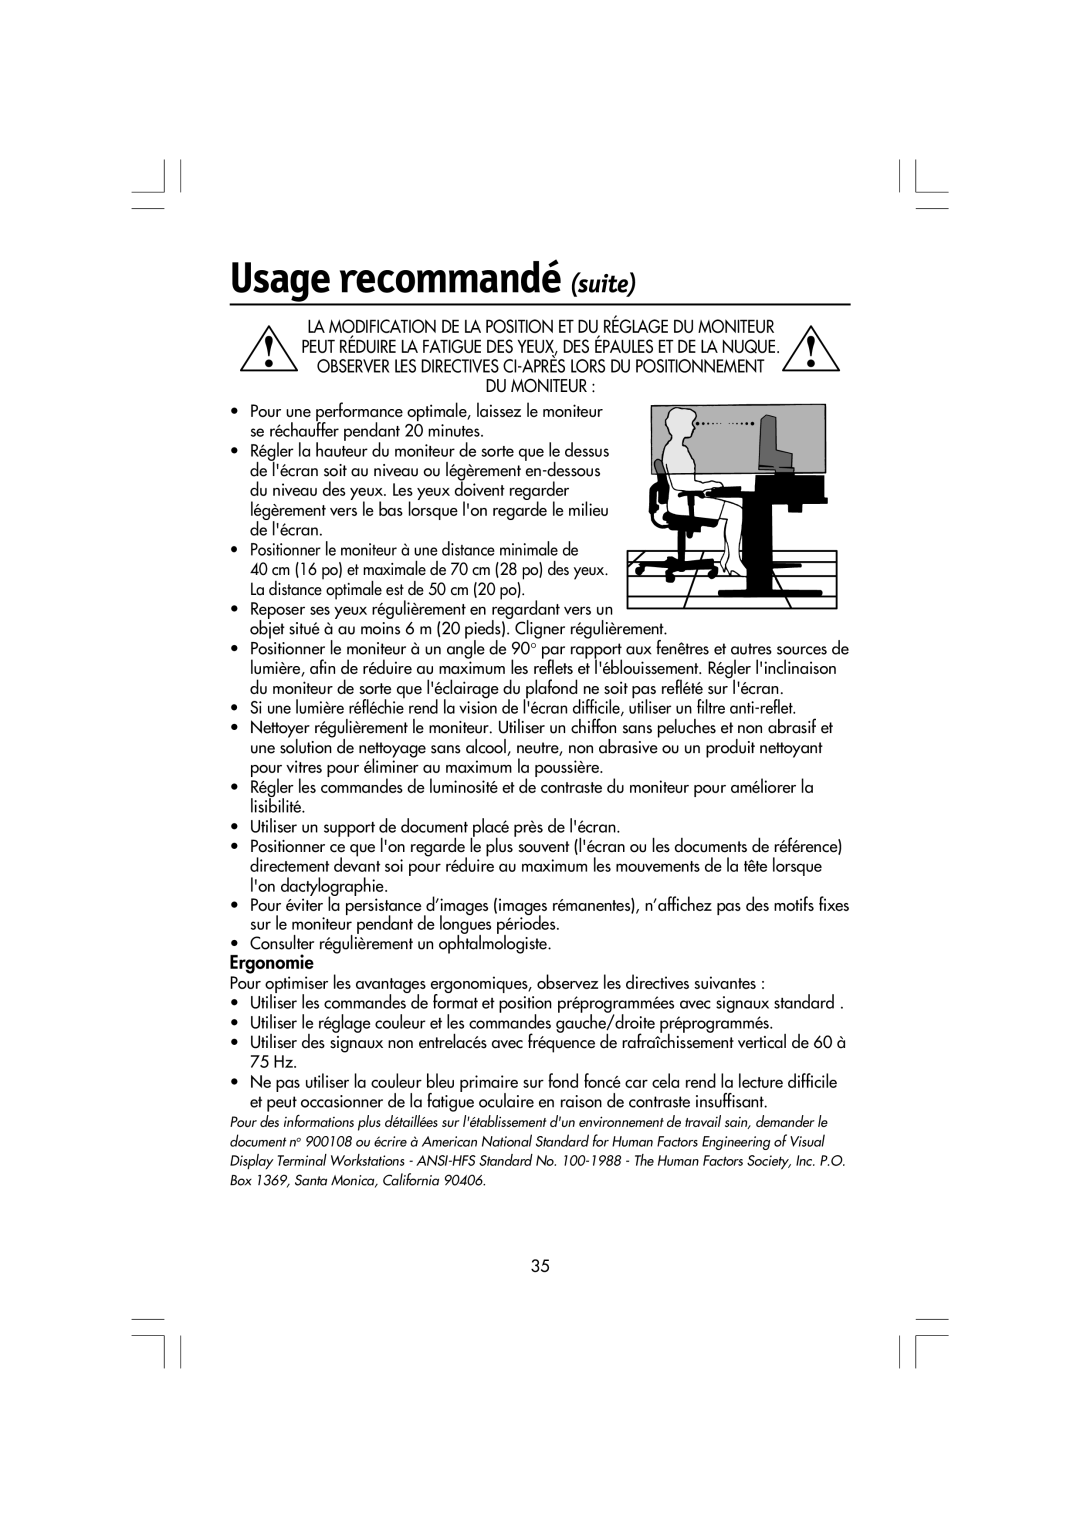 Mitsubishi Electronics LCD1560M manual Usage recommandé suite, Ergonomie 